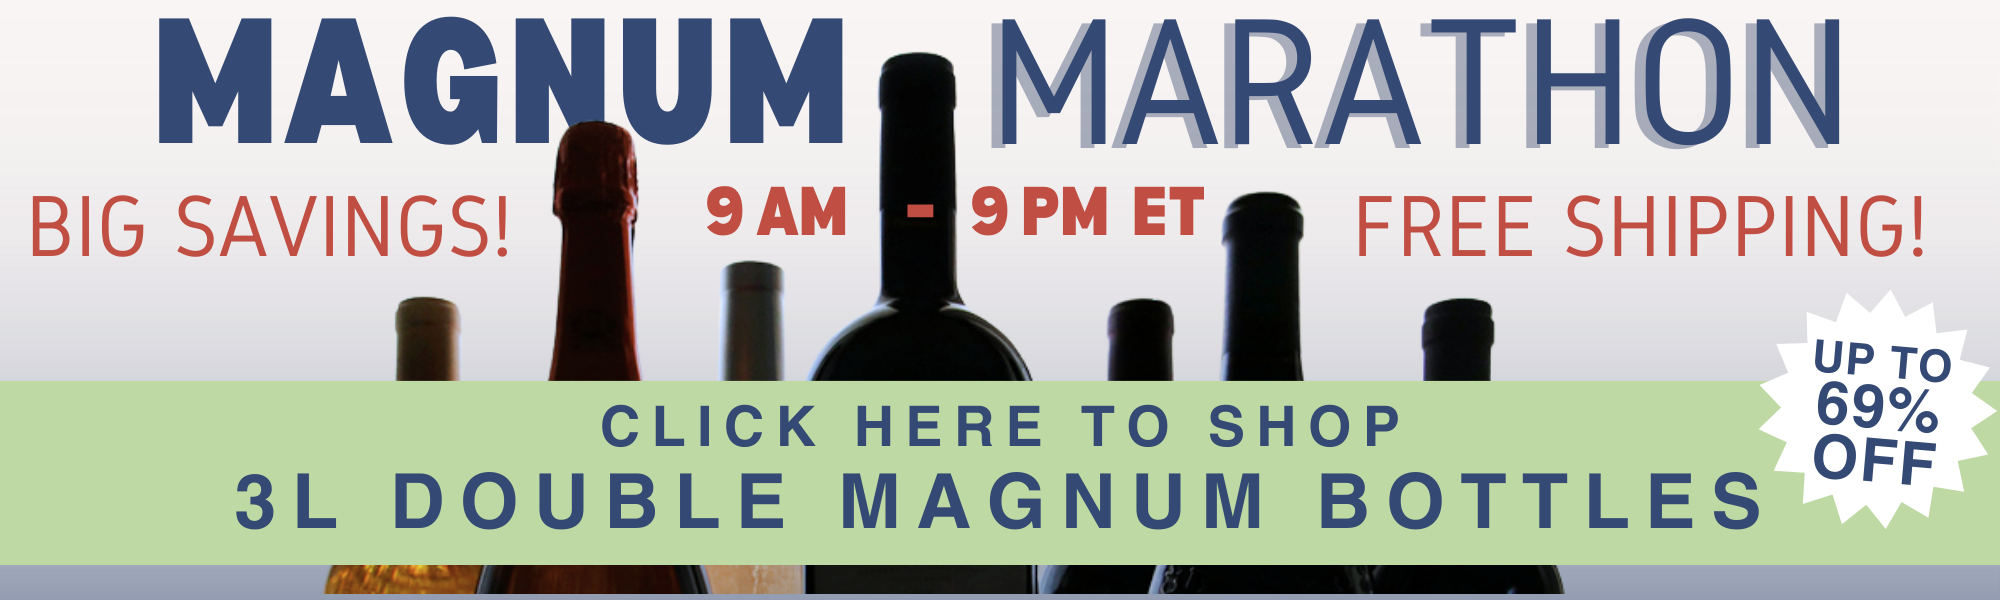 Magnum Marathon Shop Now - HP